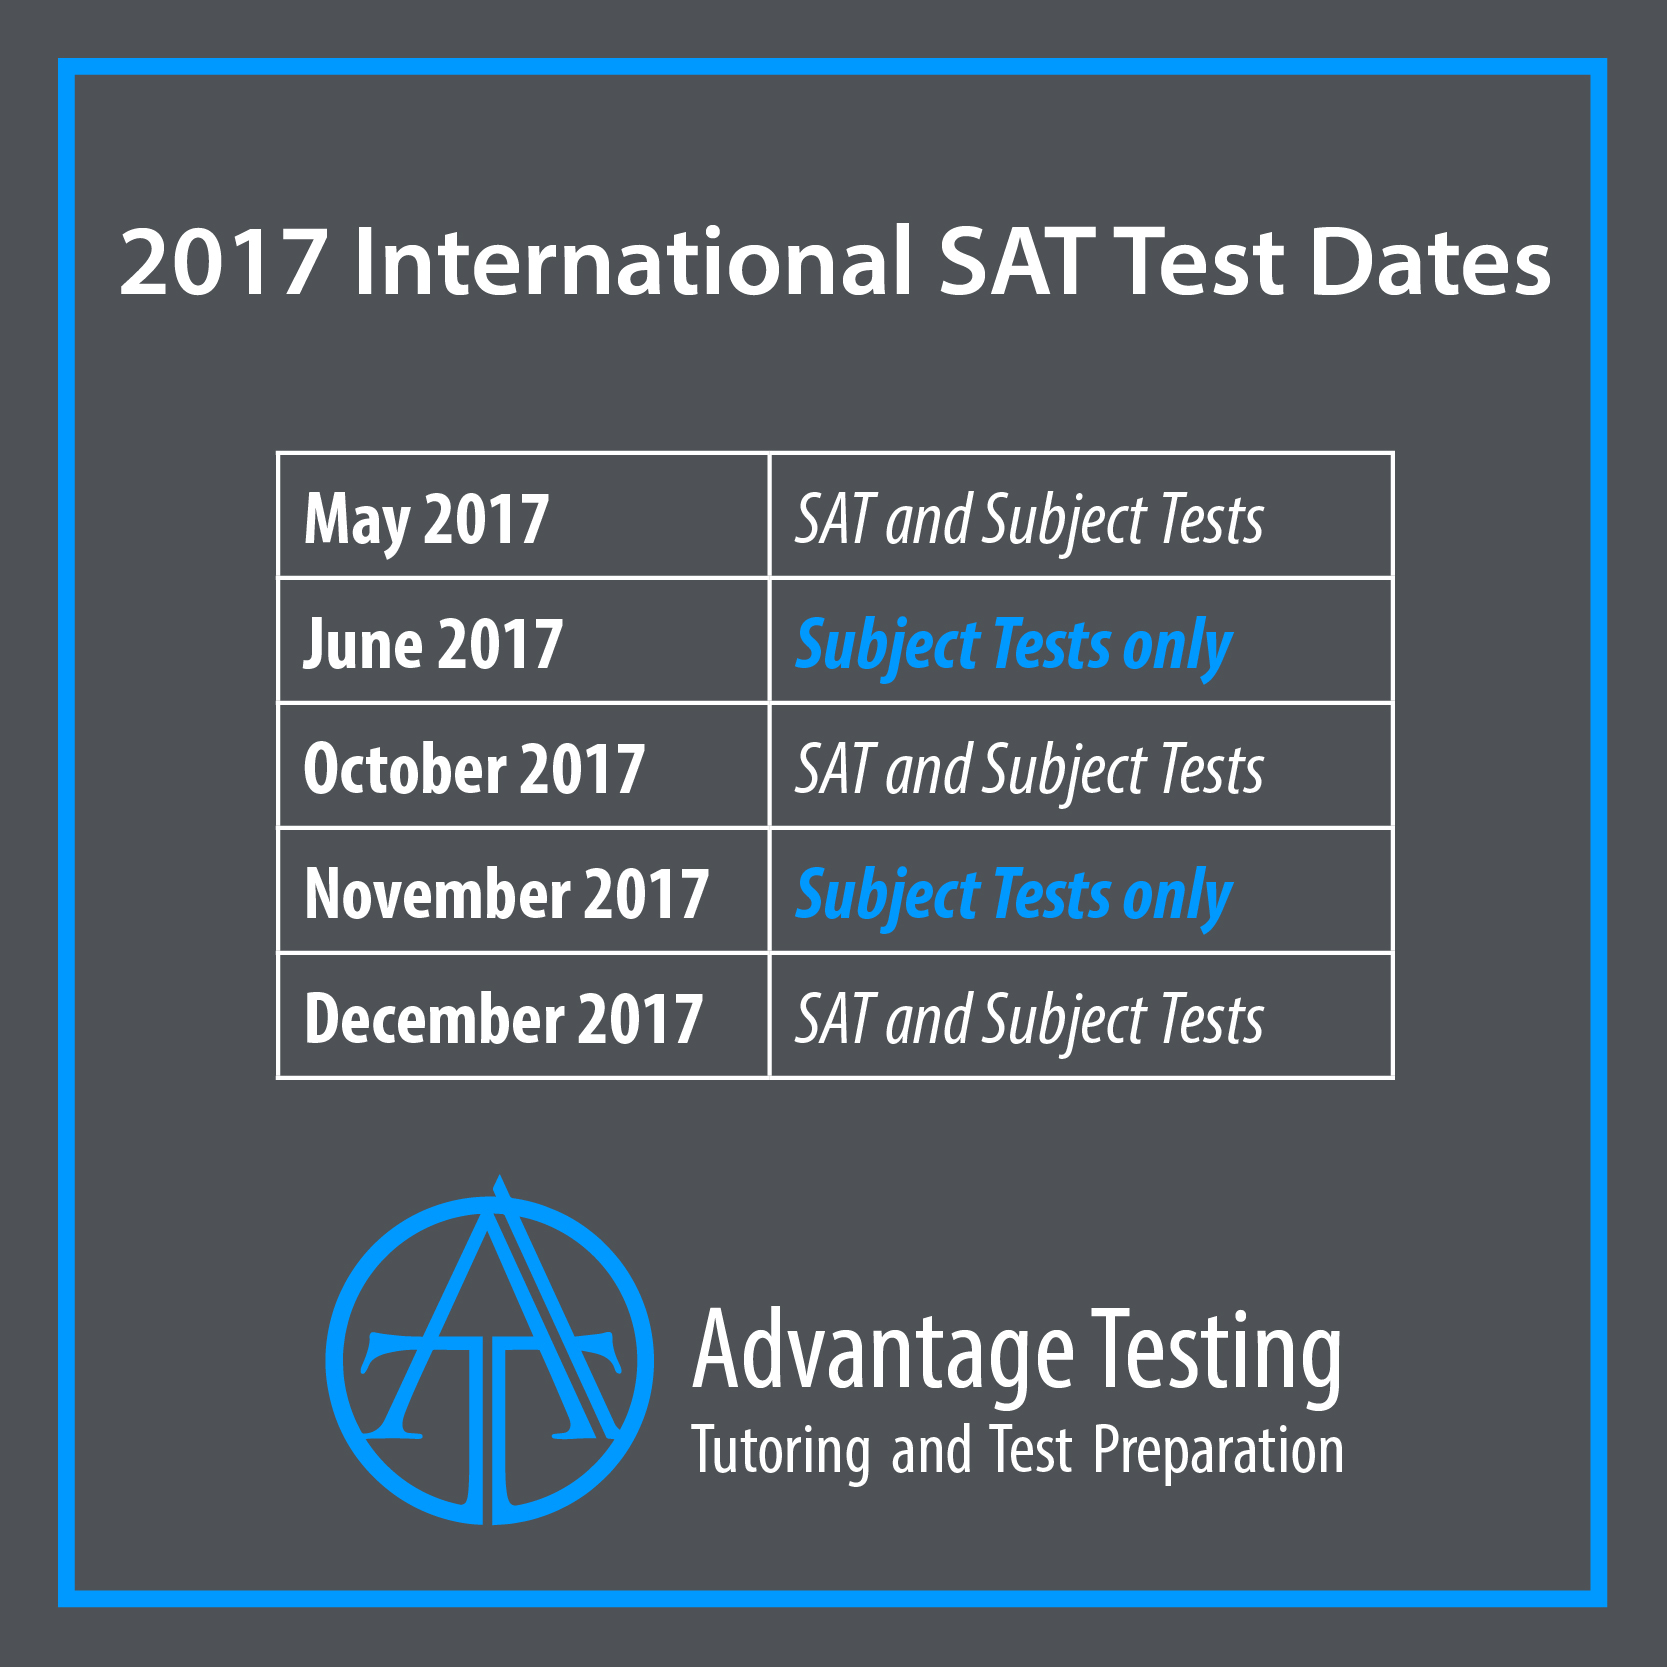 International SAT test dates have changed